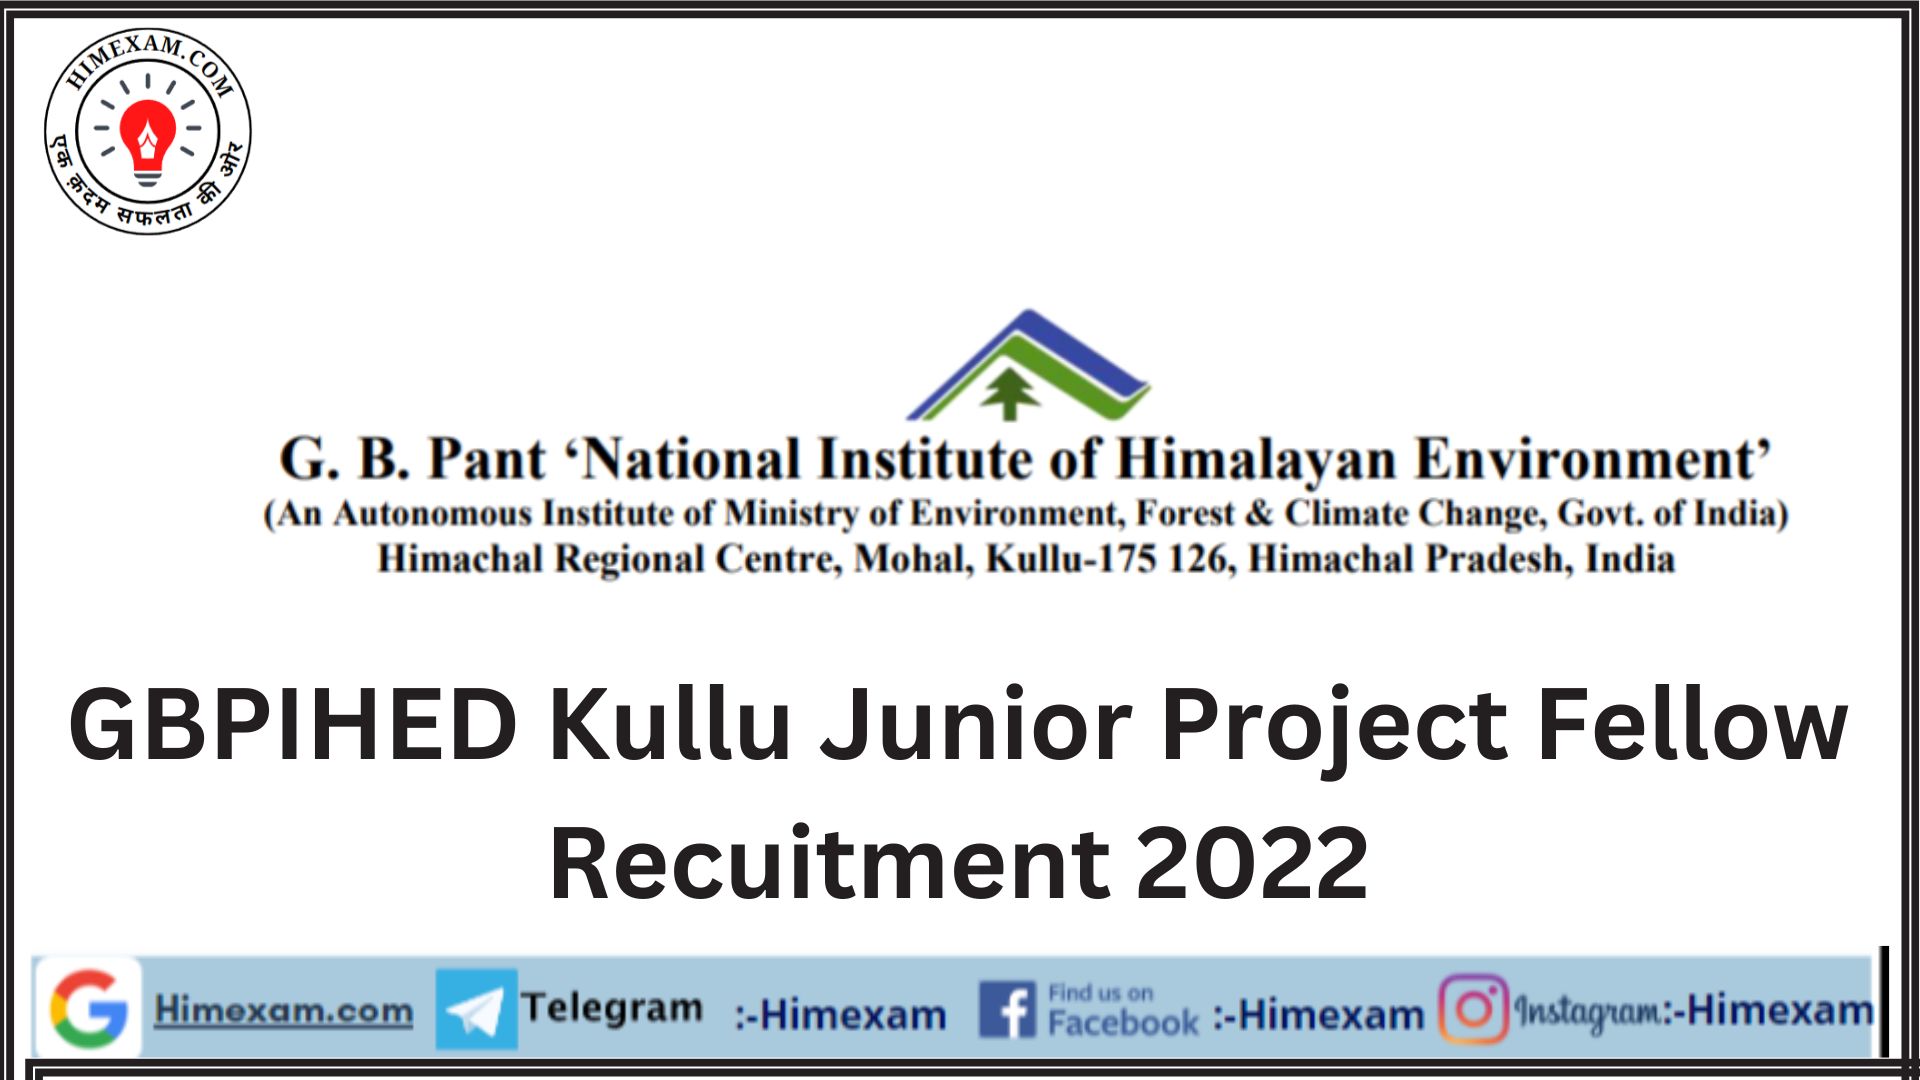 GBPIHED Kullu Junior Project Fellow Recuitment 2022